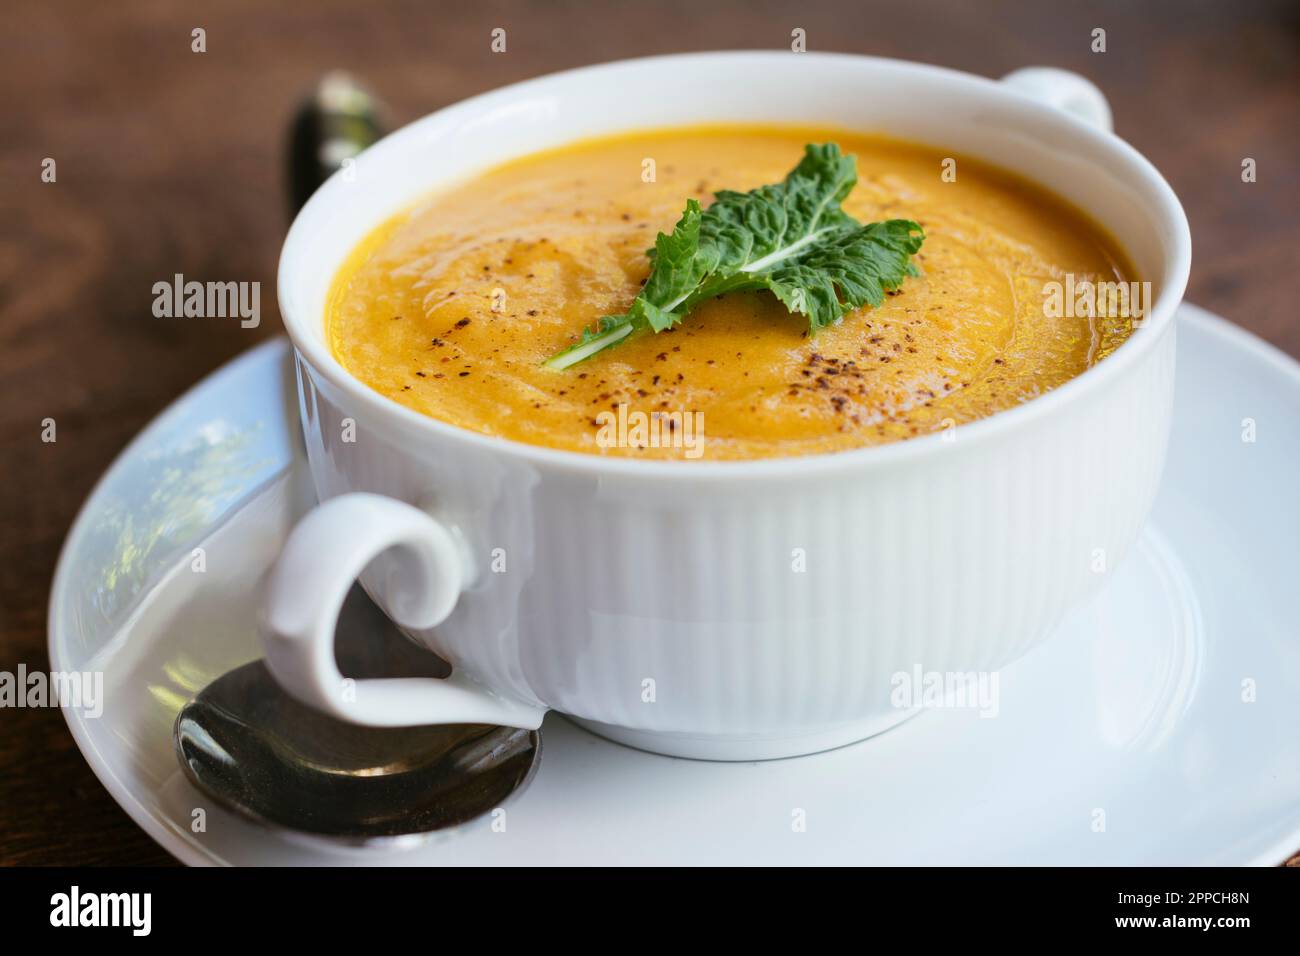 Home made vegan turnip and carrot soup. Stock Photo